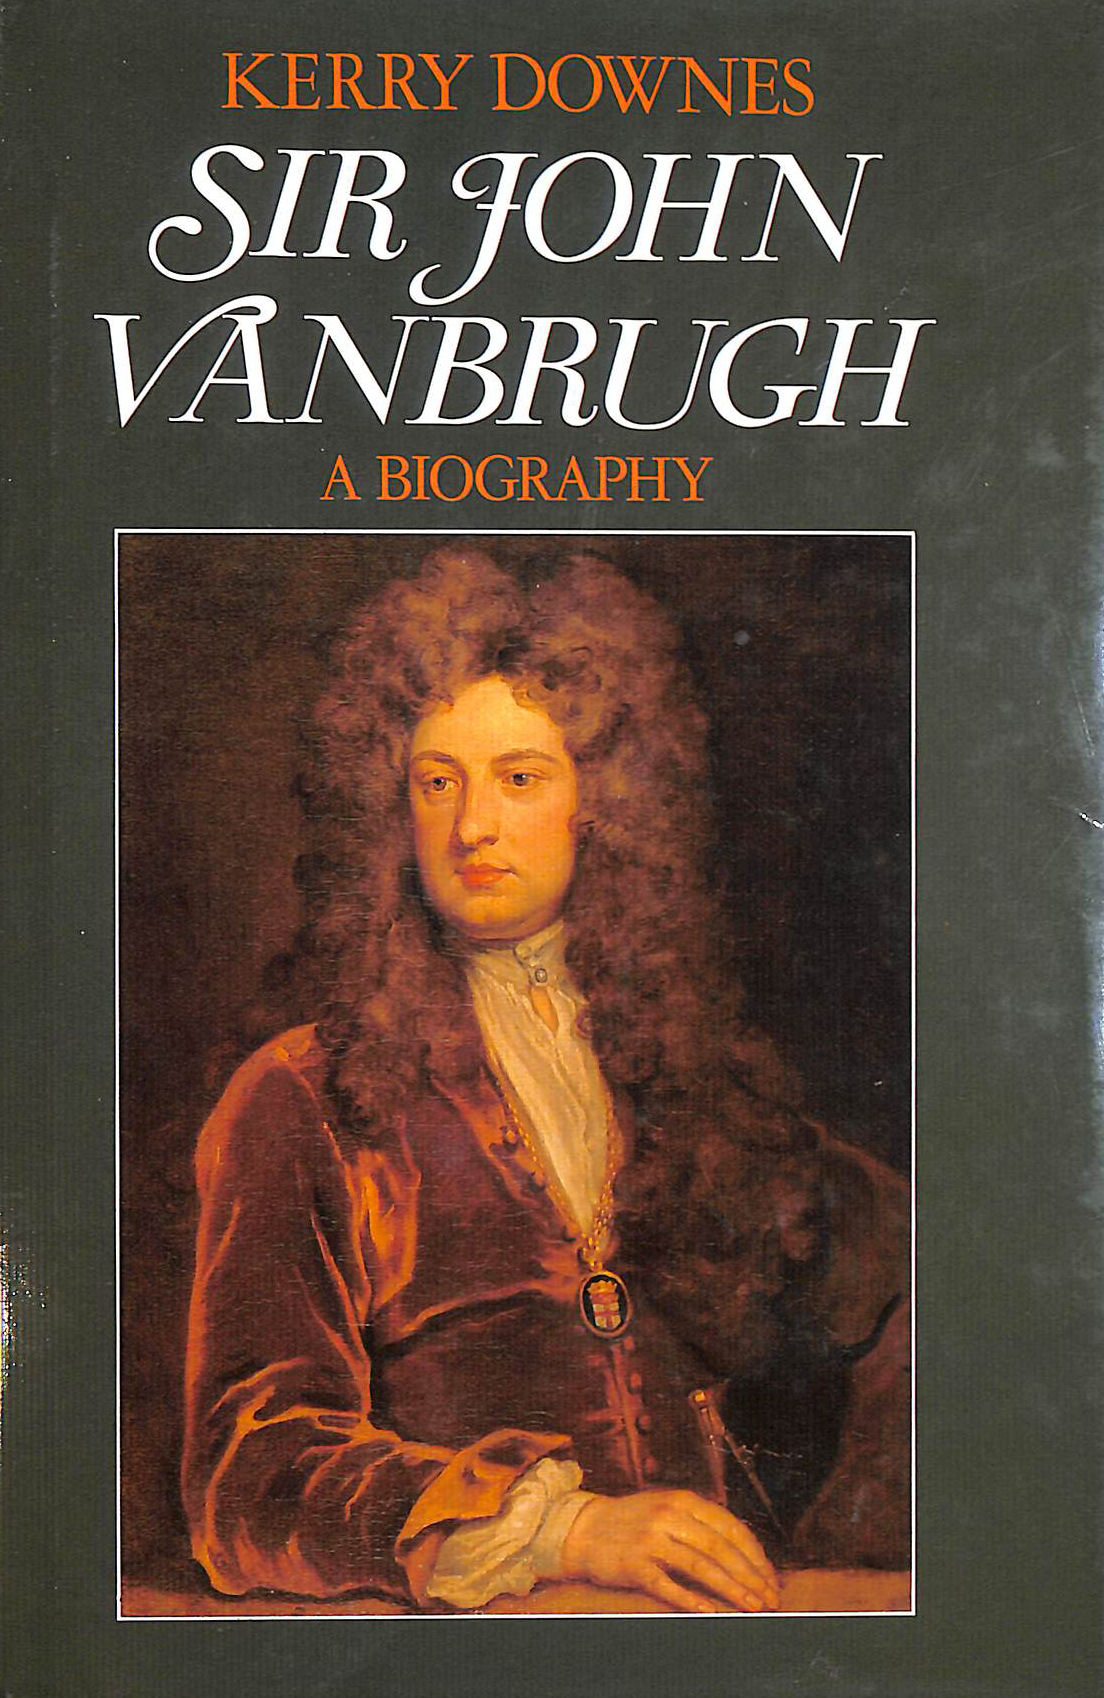 DOWNES, KERRY - Sir John Vanbrugh: A Biography